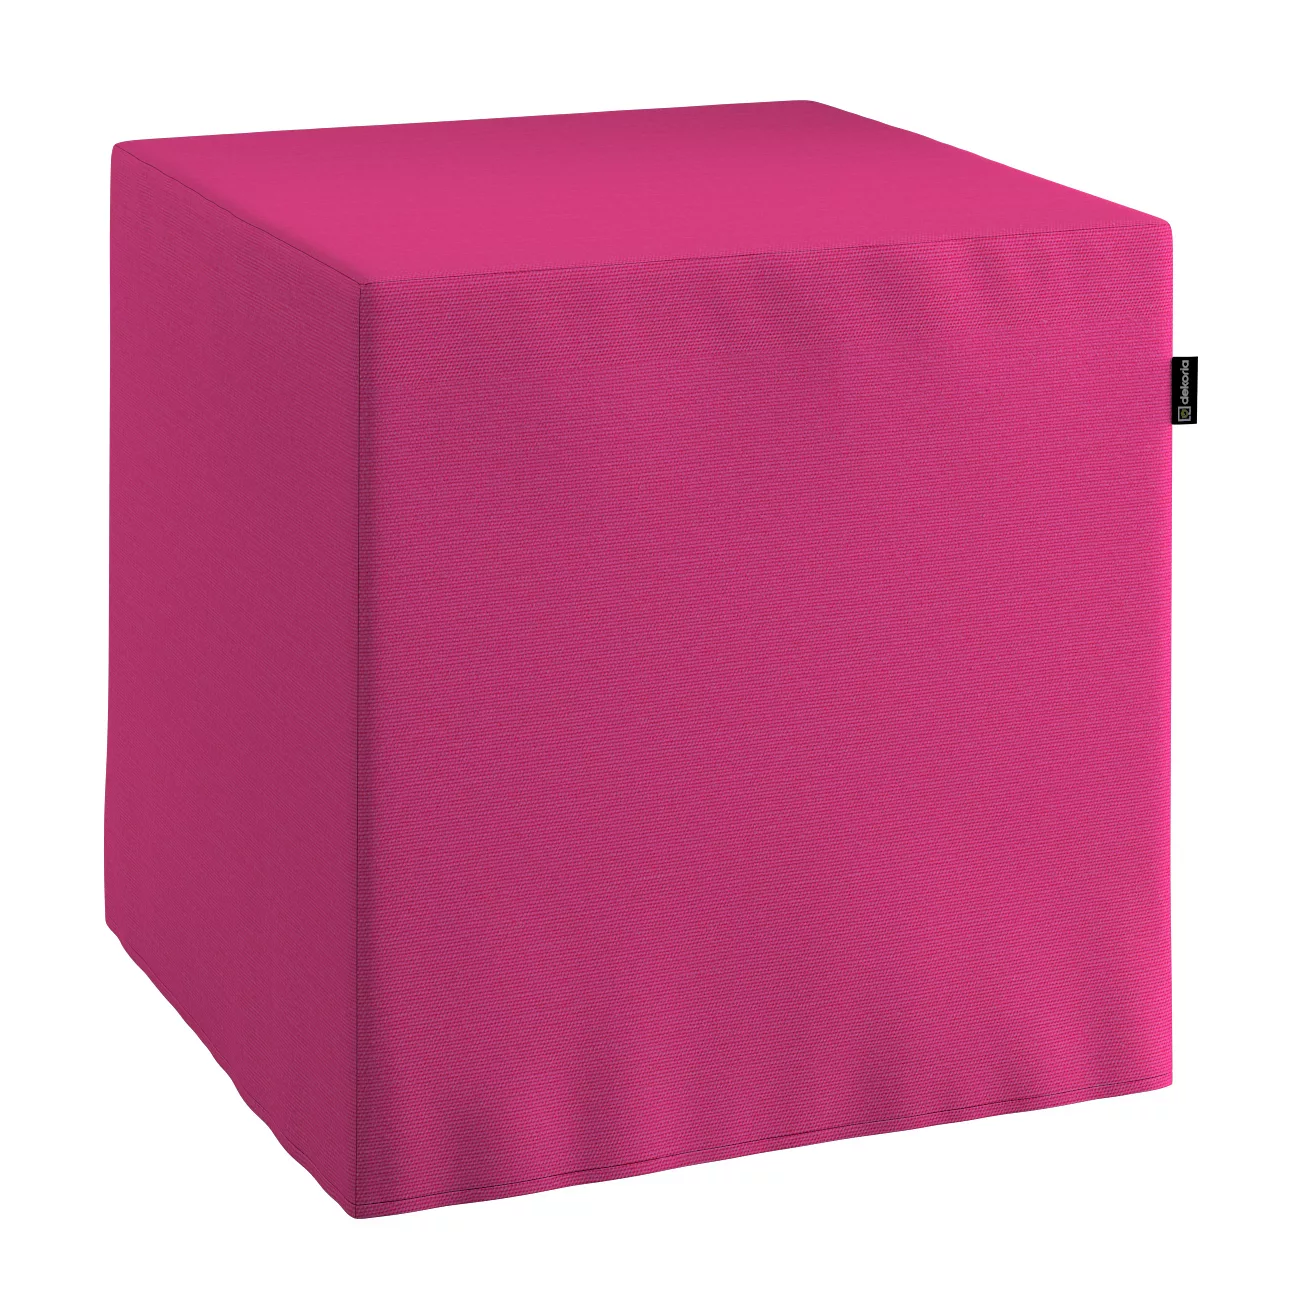 Sitzwürfel, rosa, 40 x 40 x 40 cm, Loneta (133-60) günstig online kaufen